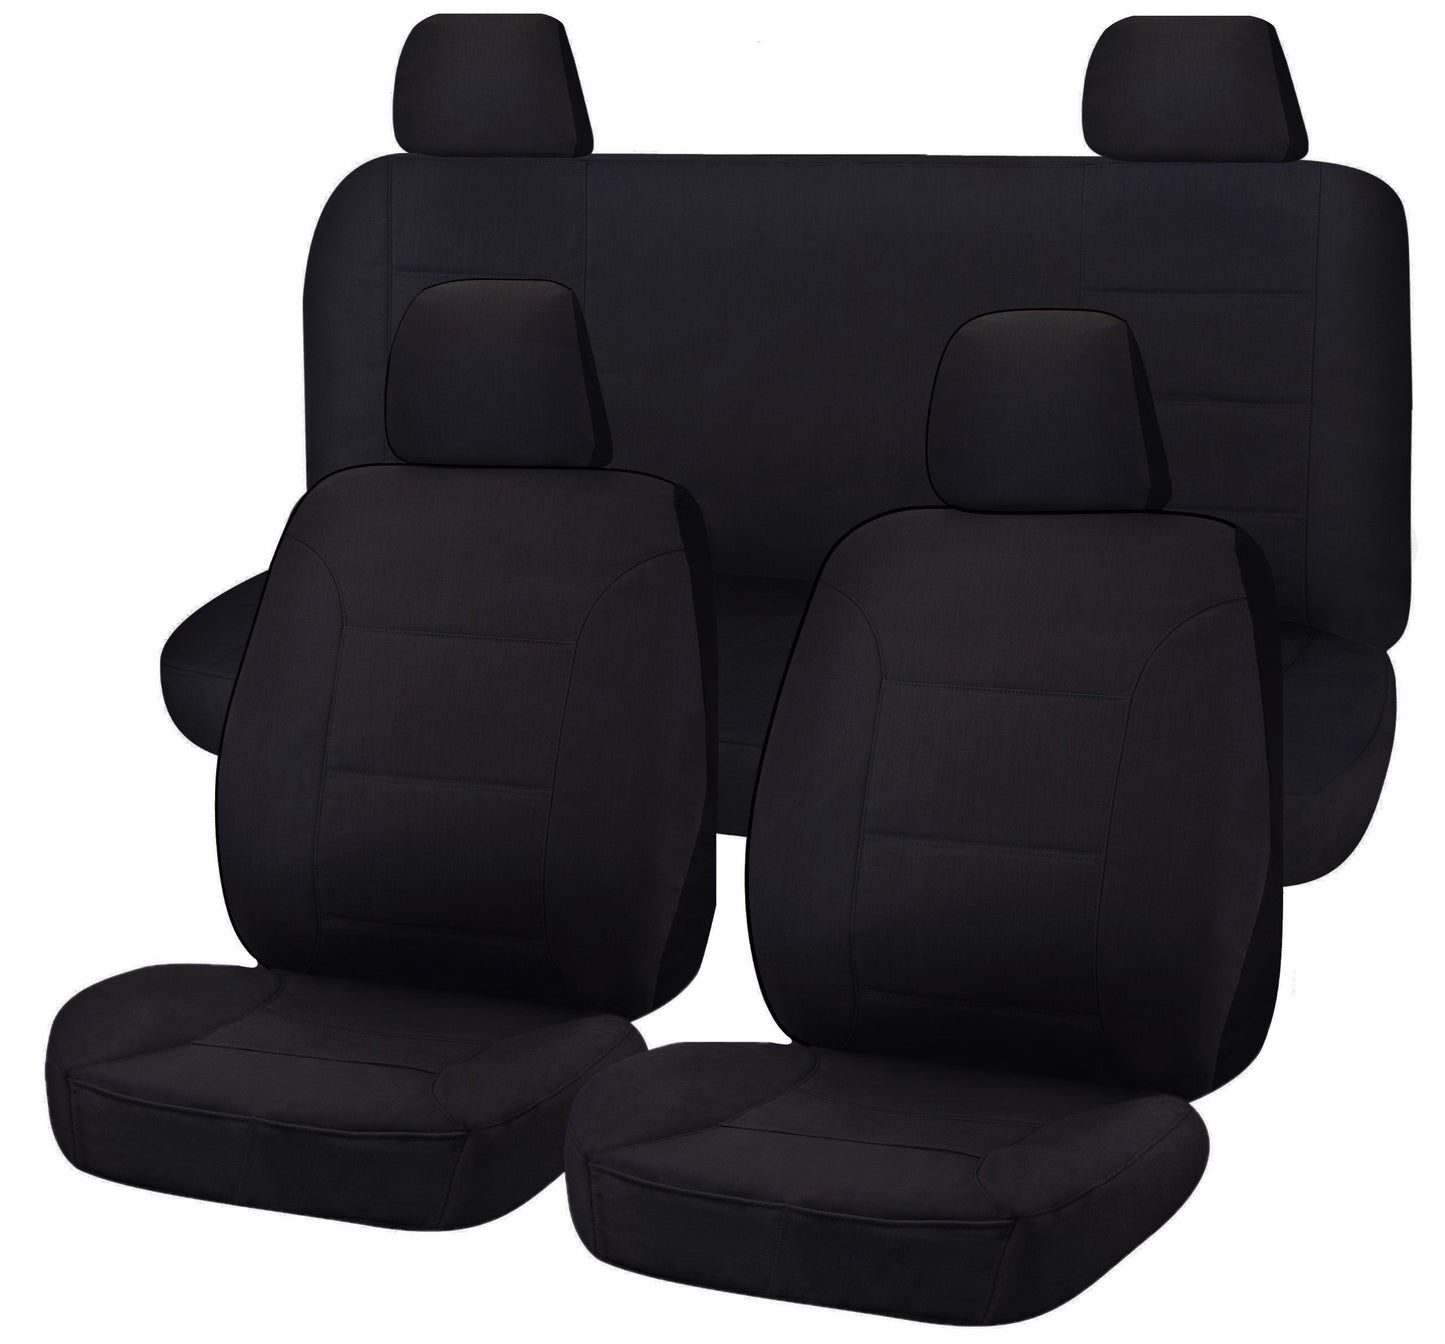 Seat Covers for NISSAN NAVARA D23 SERIES 3 NP300 11/2017 - 11/2020 DUAL CAB FR BLACK ALL TERRAIN